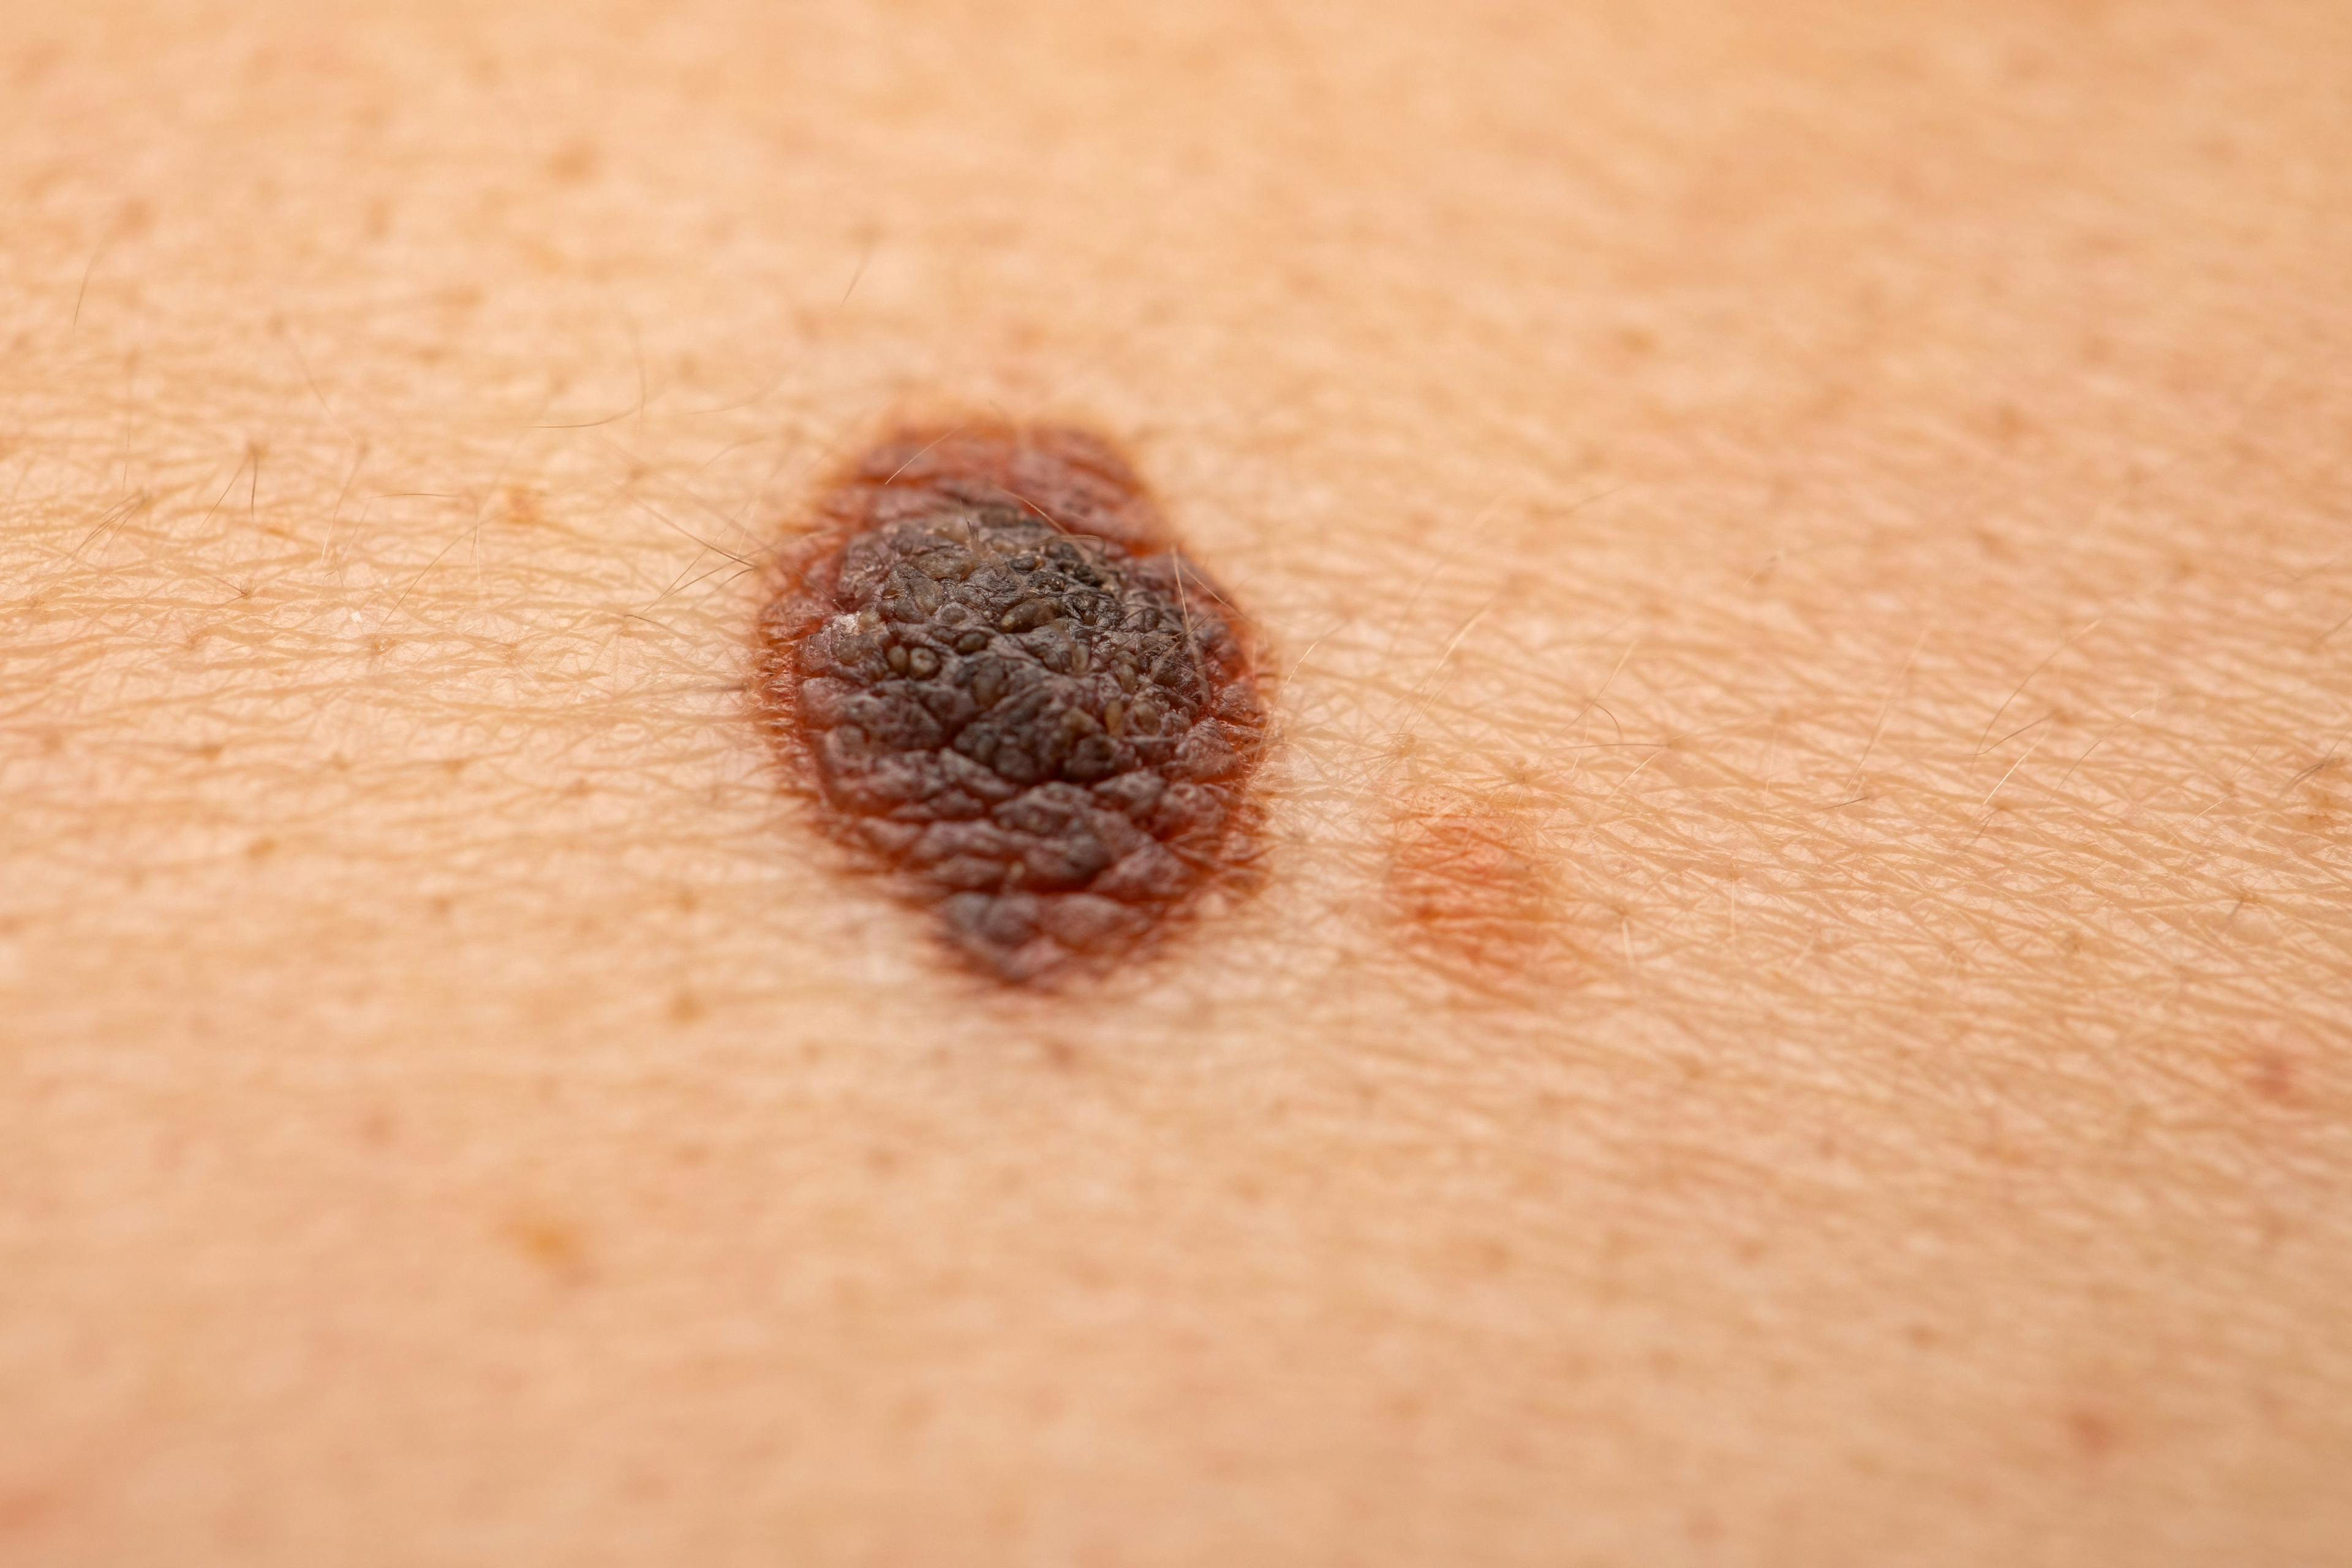 Melanoma on Skin | image credit: Ocskay Mark - stock.adobe.com